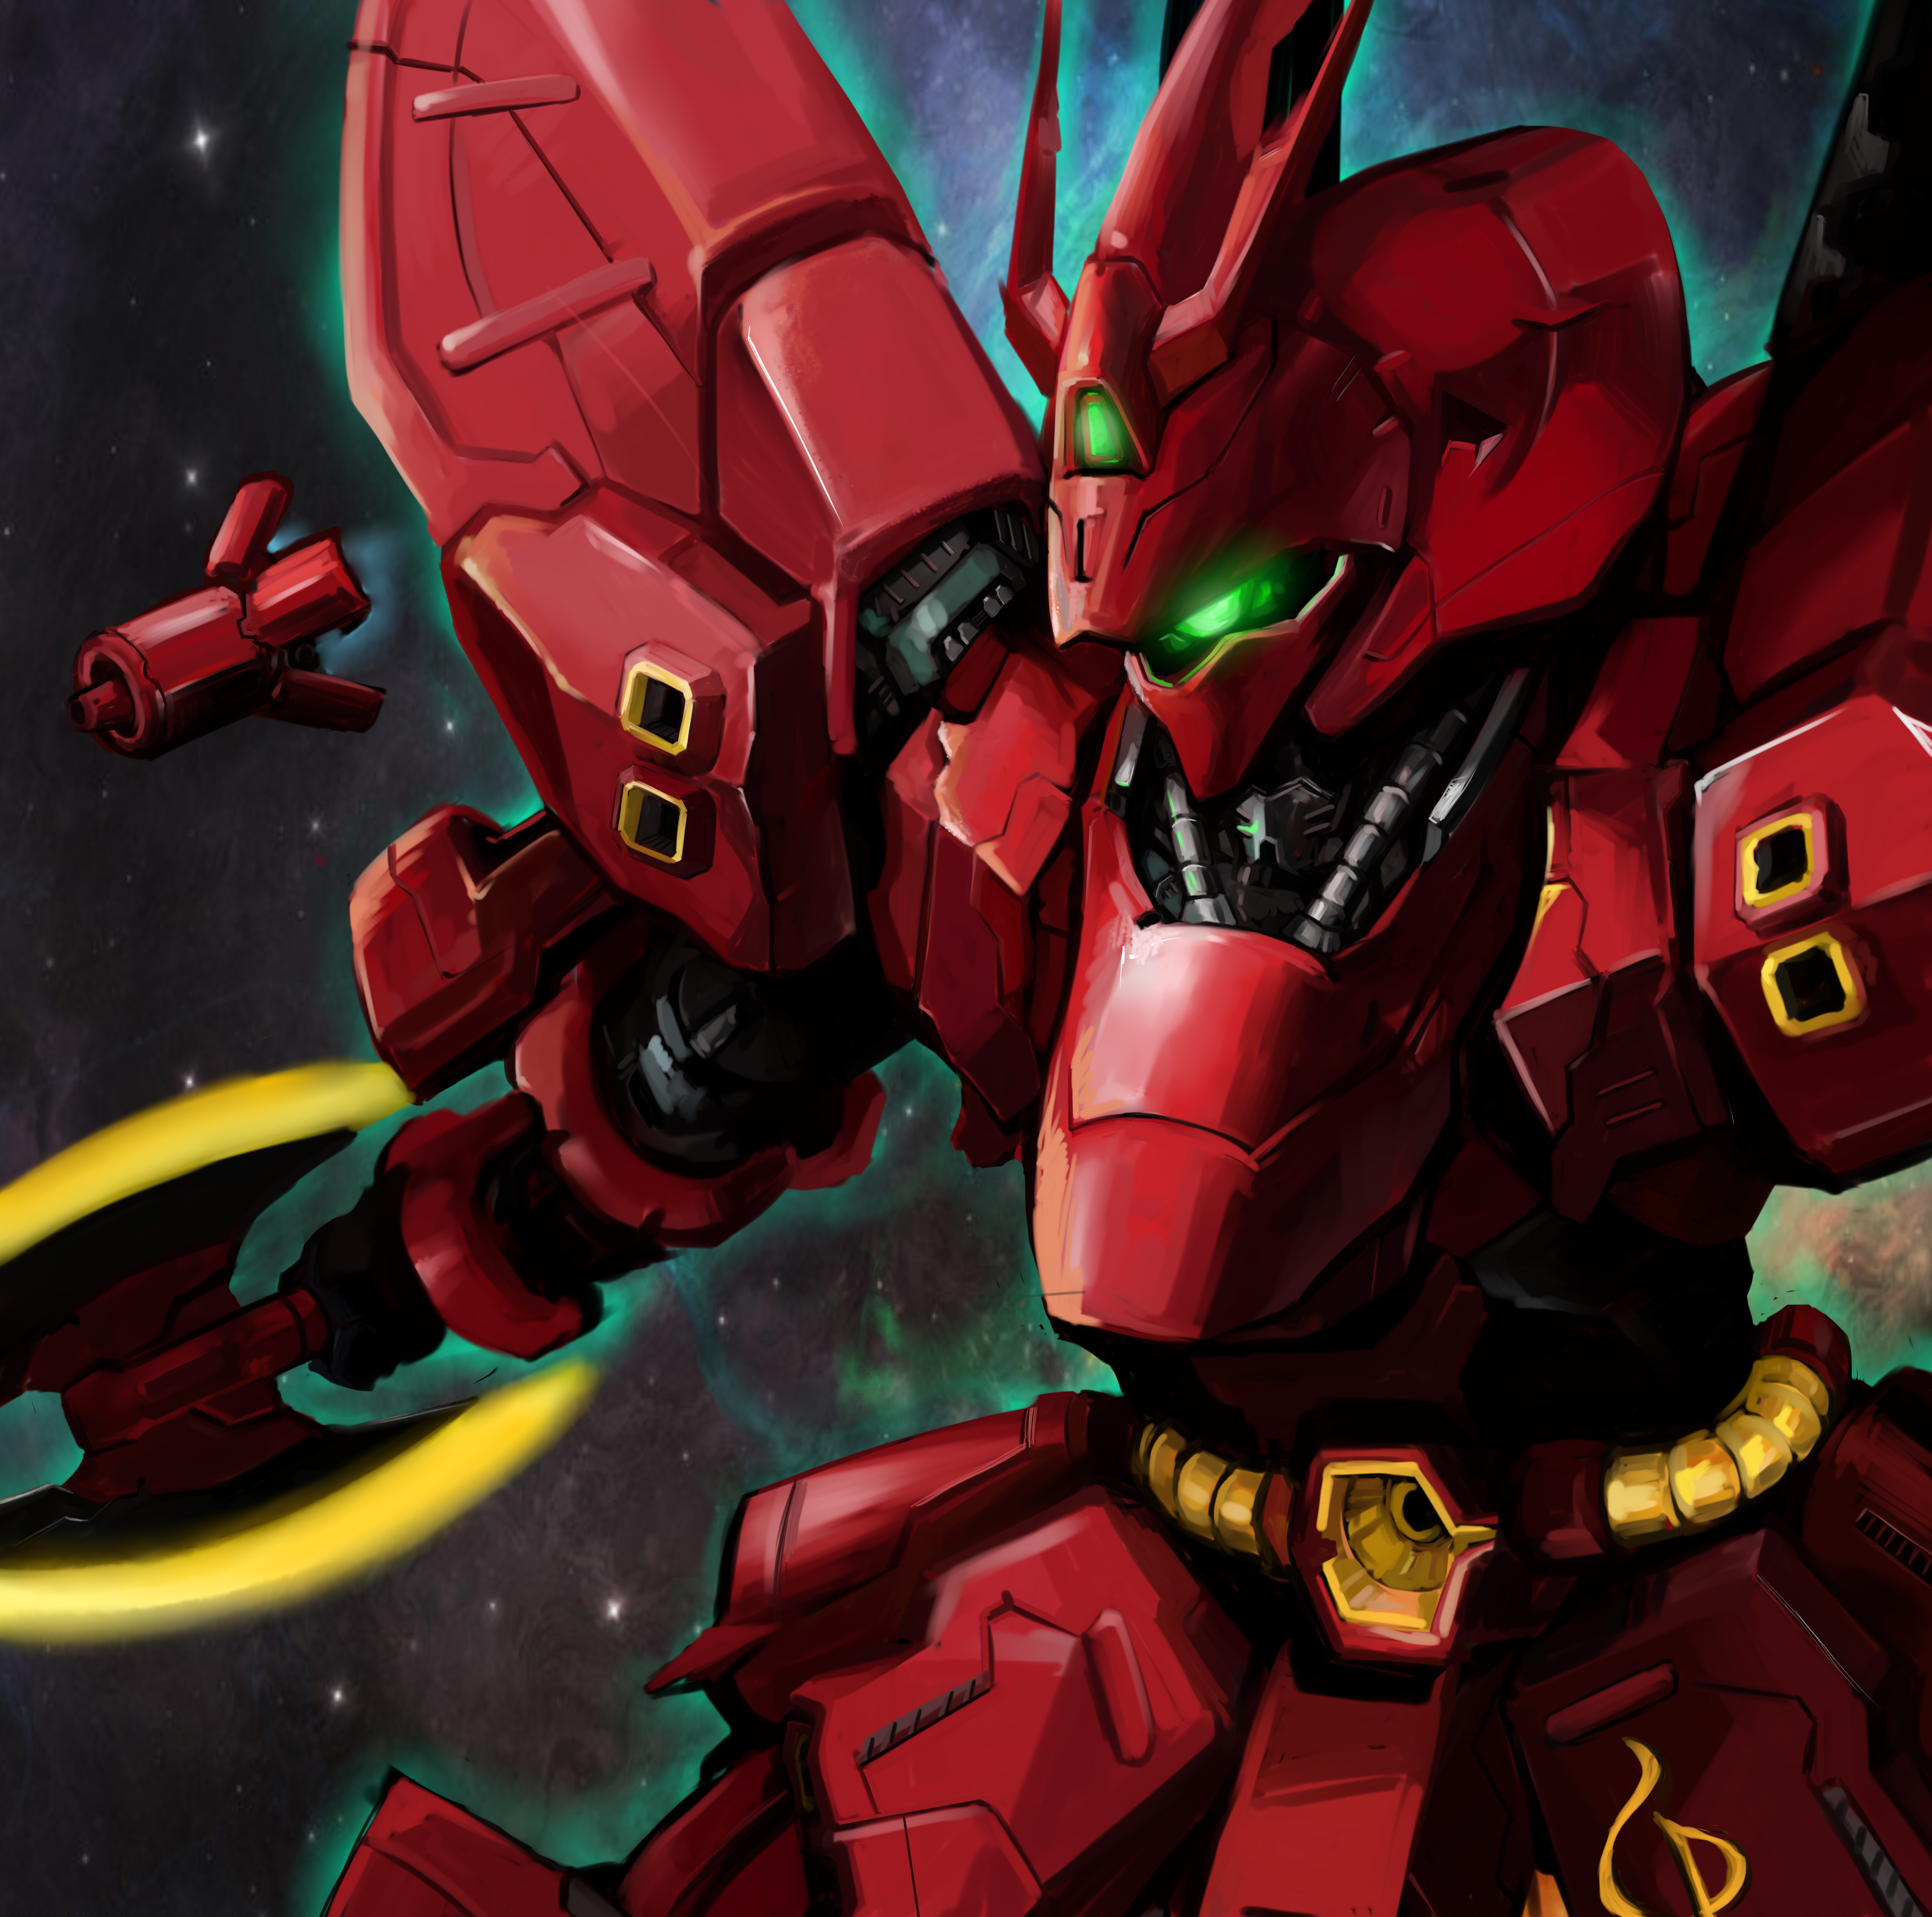 Anime Mechs Mobile Suit Gundam Chars Counterattack Sazabi Mobile Suit Artwork Digital Art Fan Art 5000x4960